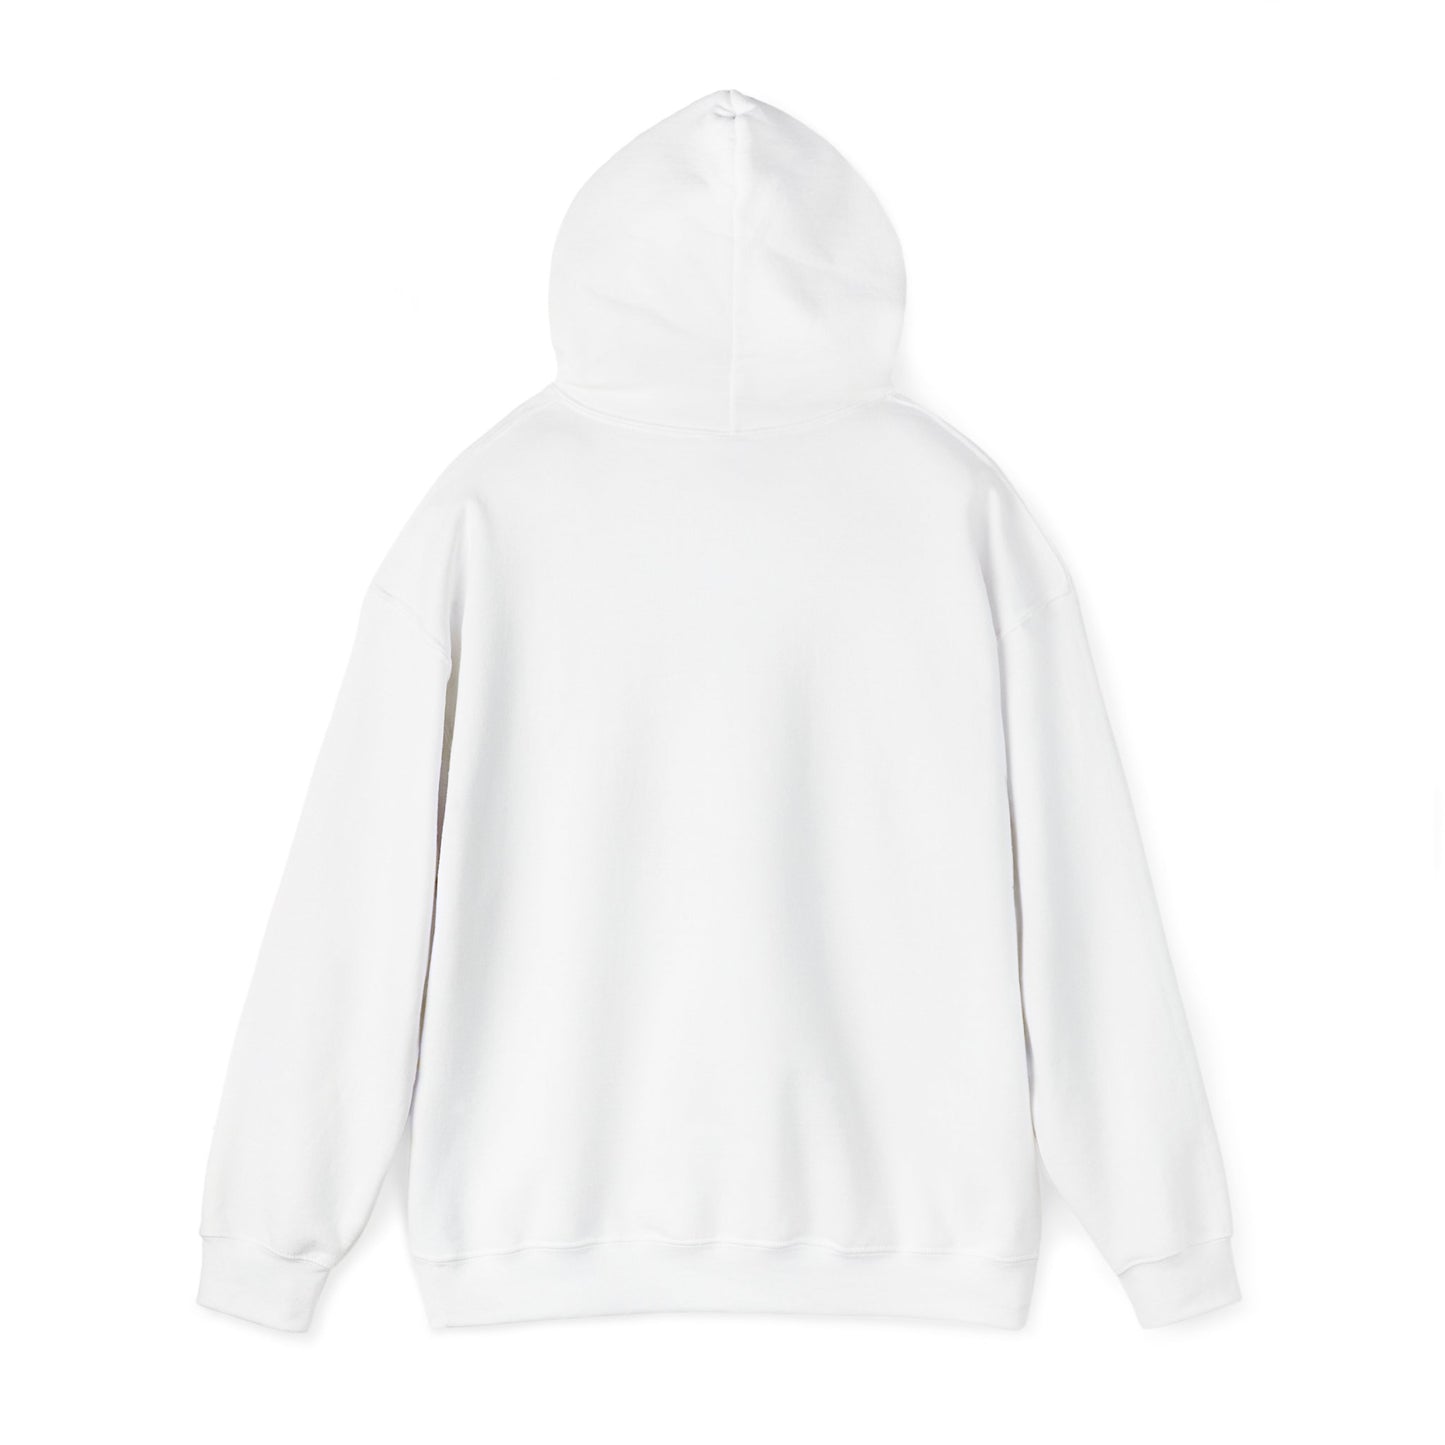 Las Nibiru: Unisex Heavy Blend Hooded Graphic Sweatshirt